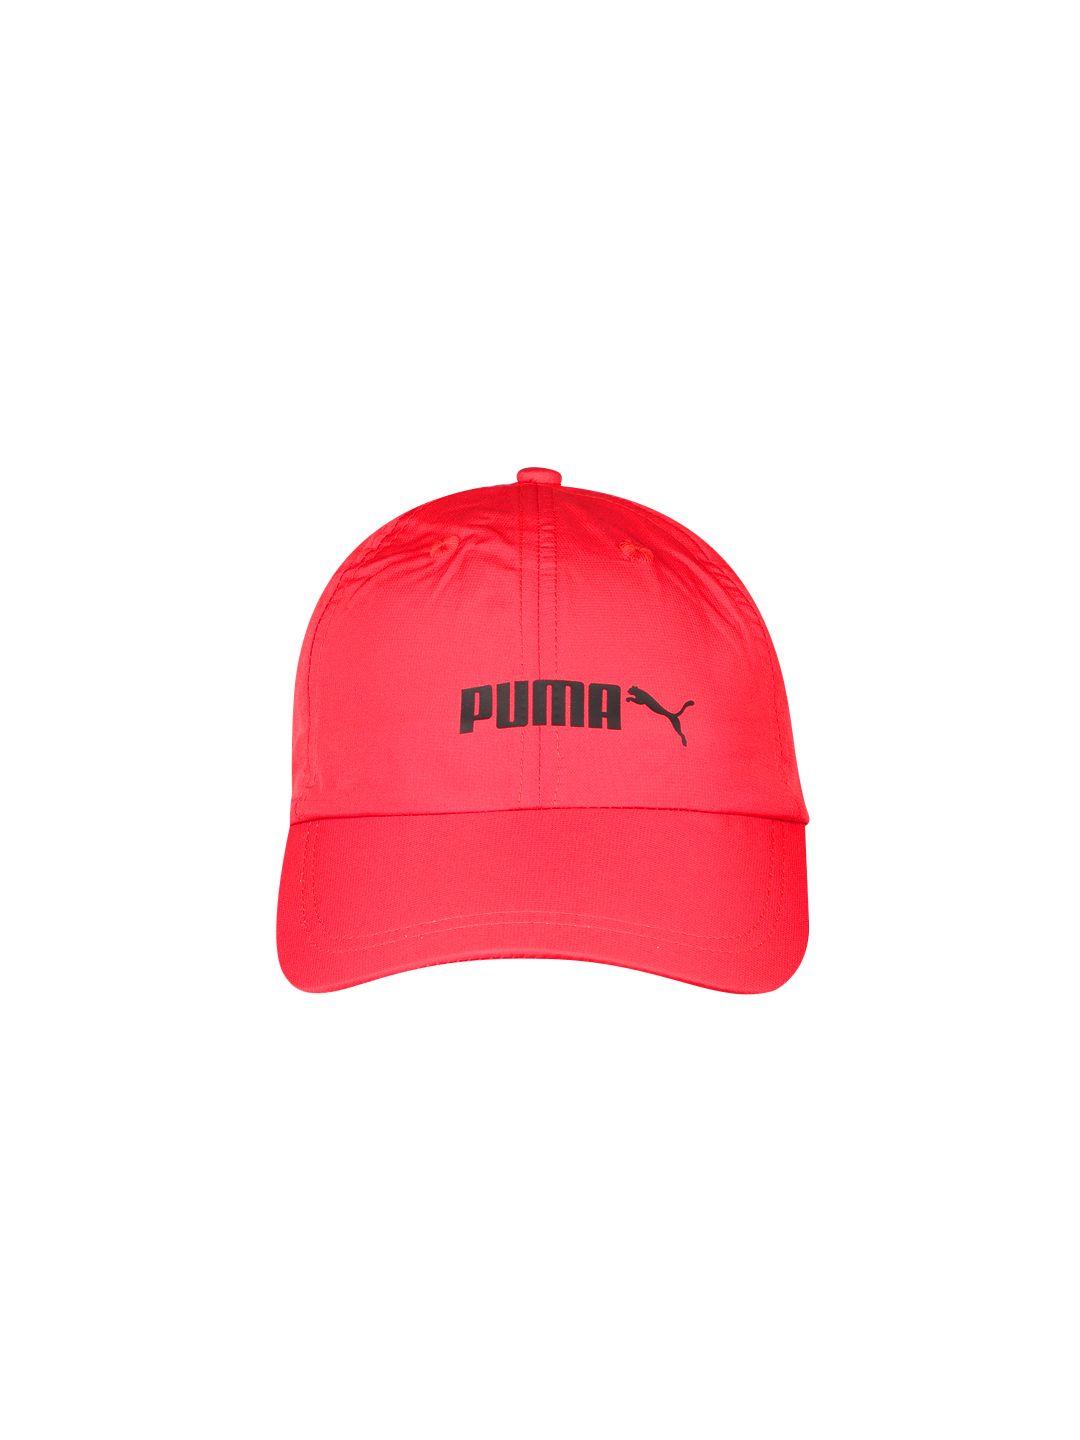 puma-men-performance-printed-baseball-cap